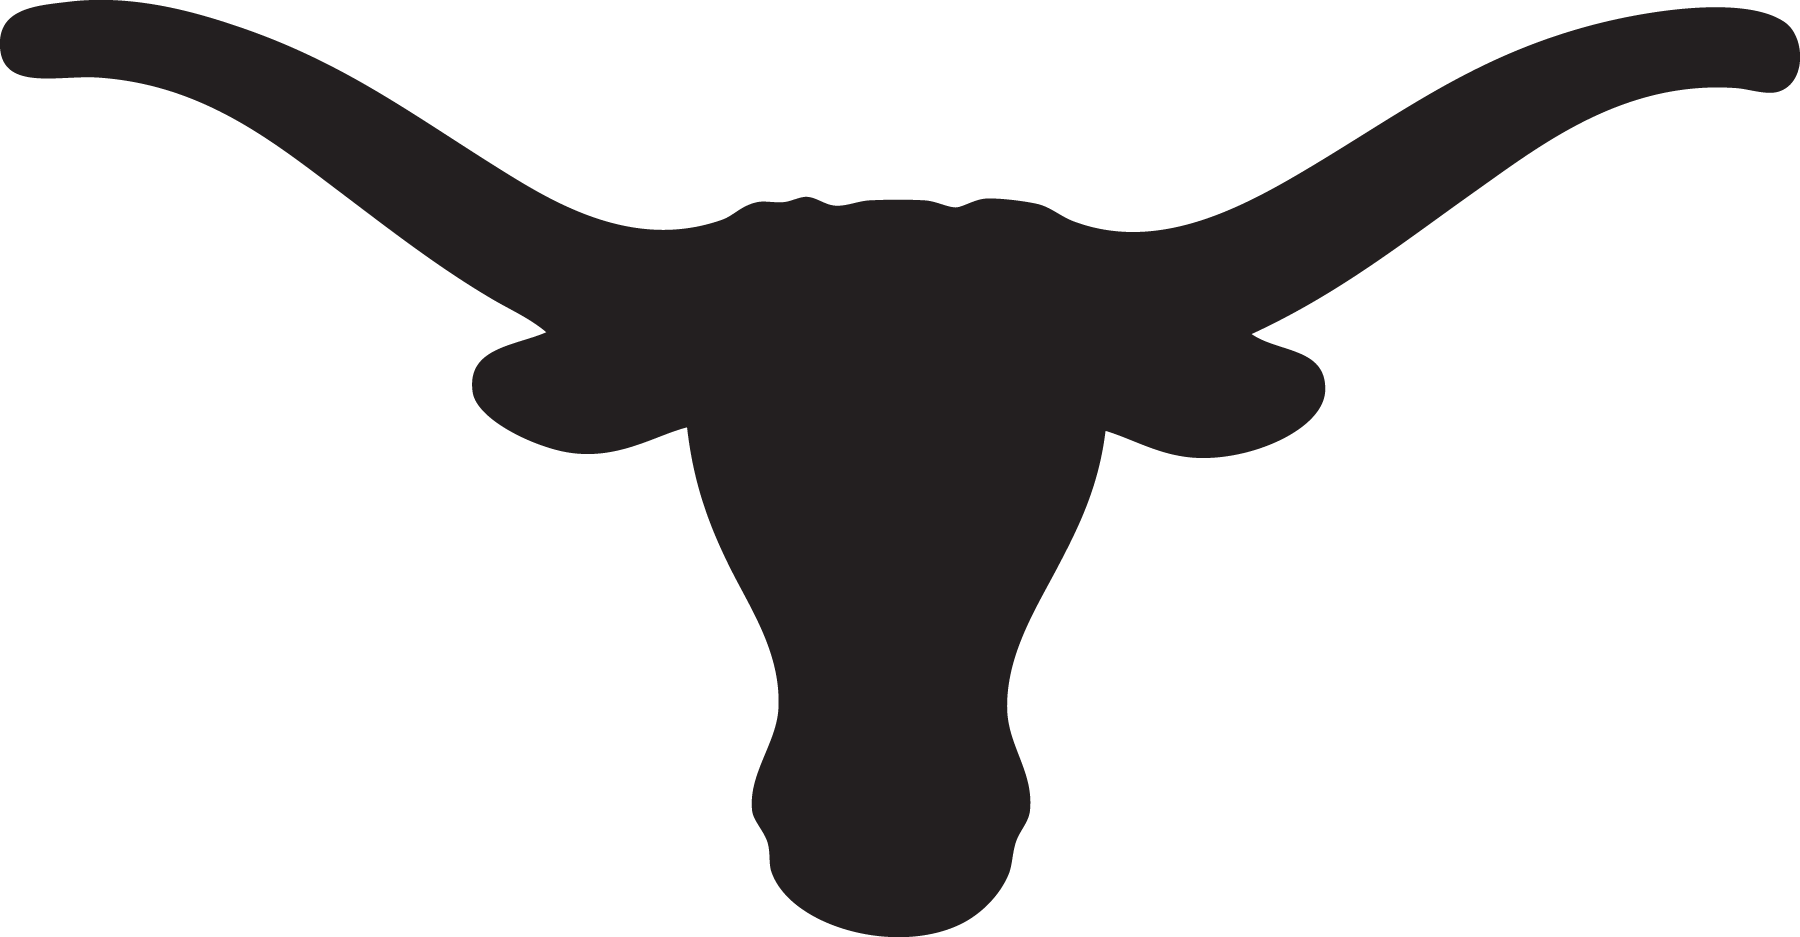 bull, cow, longhorn, animal,